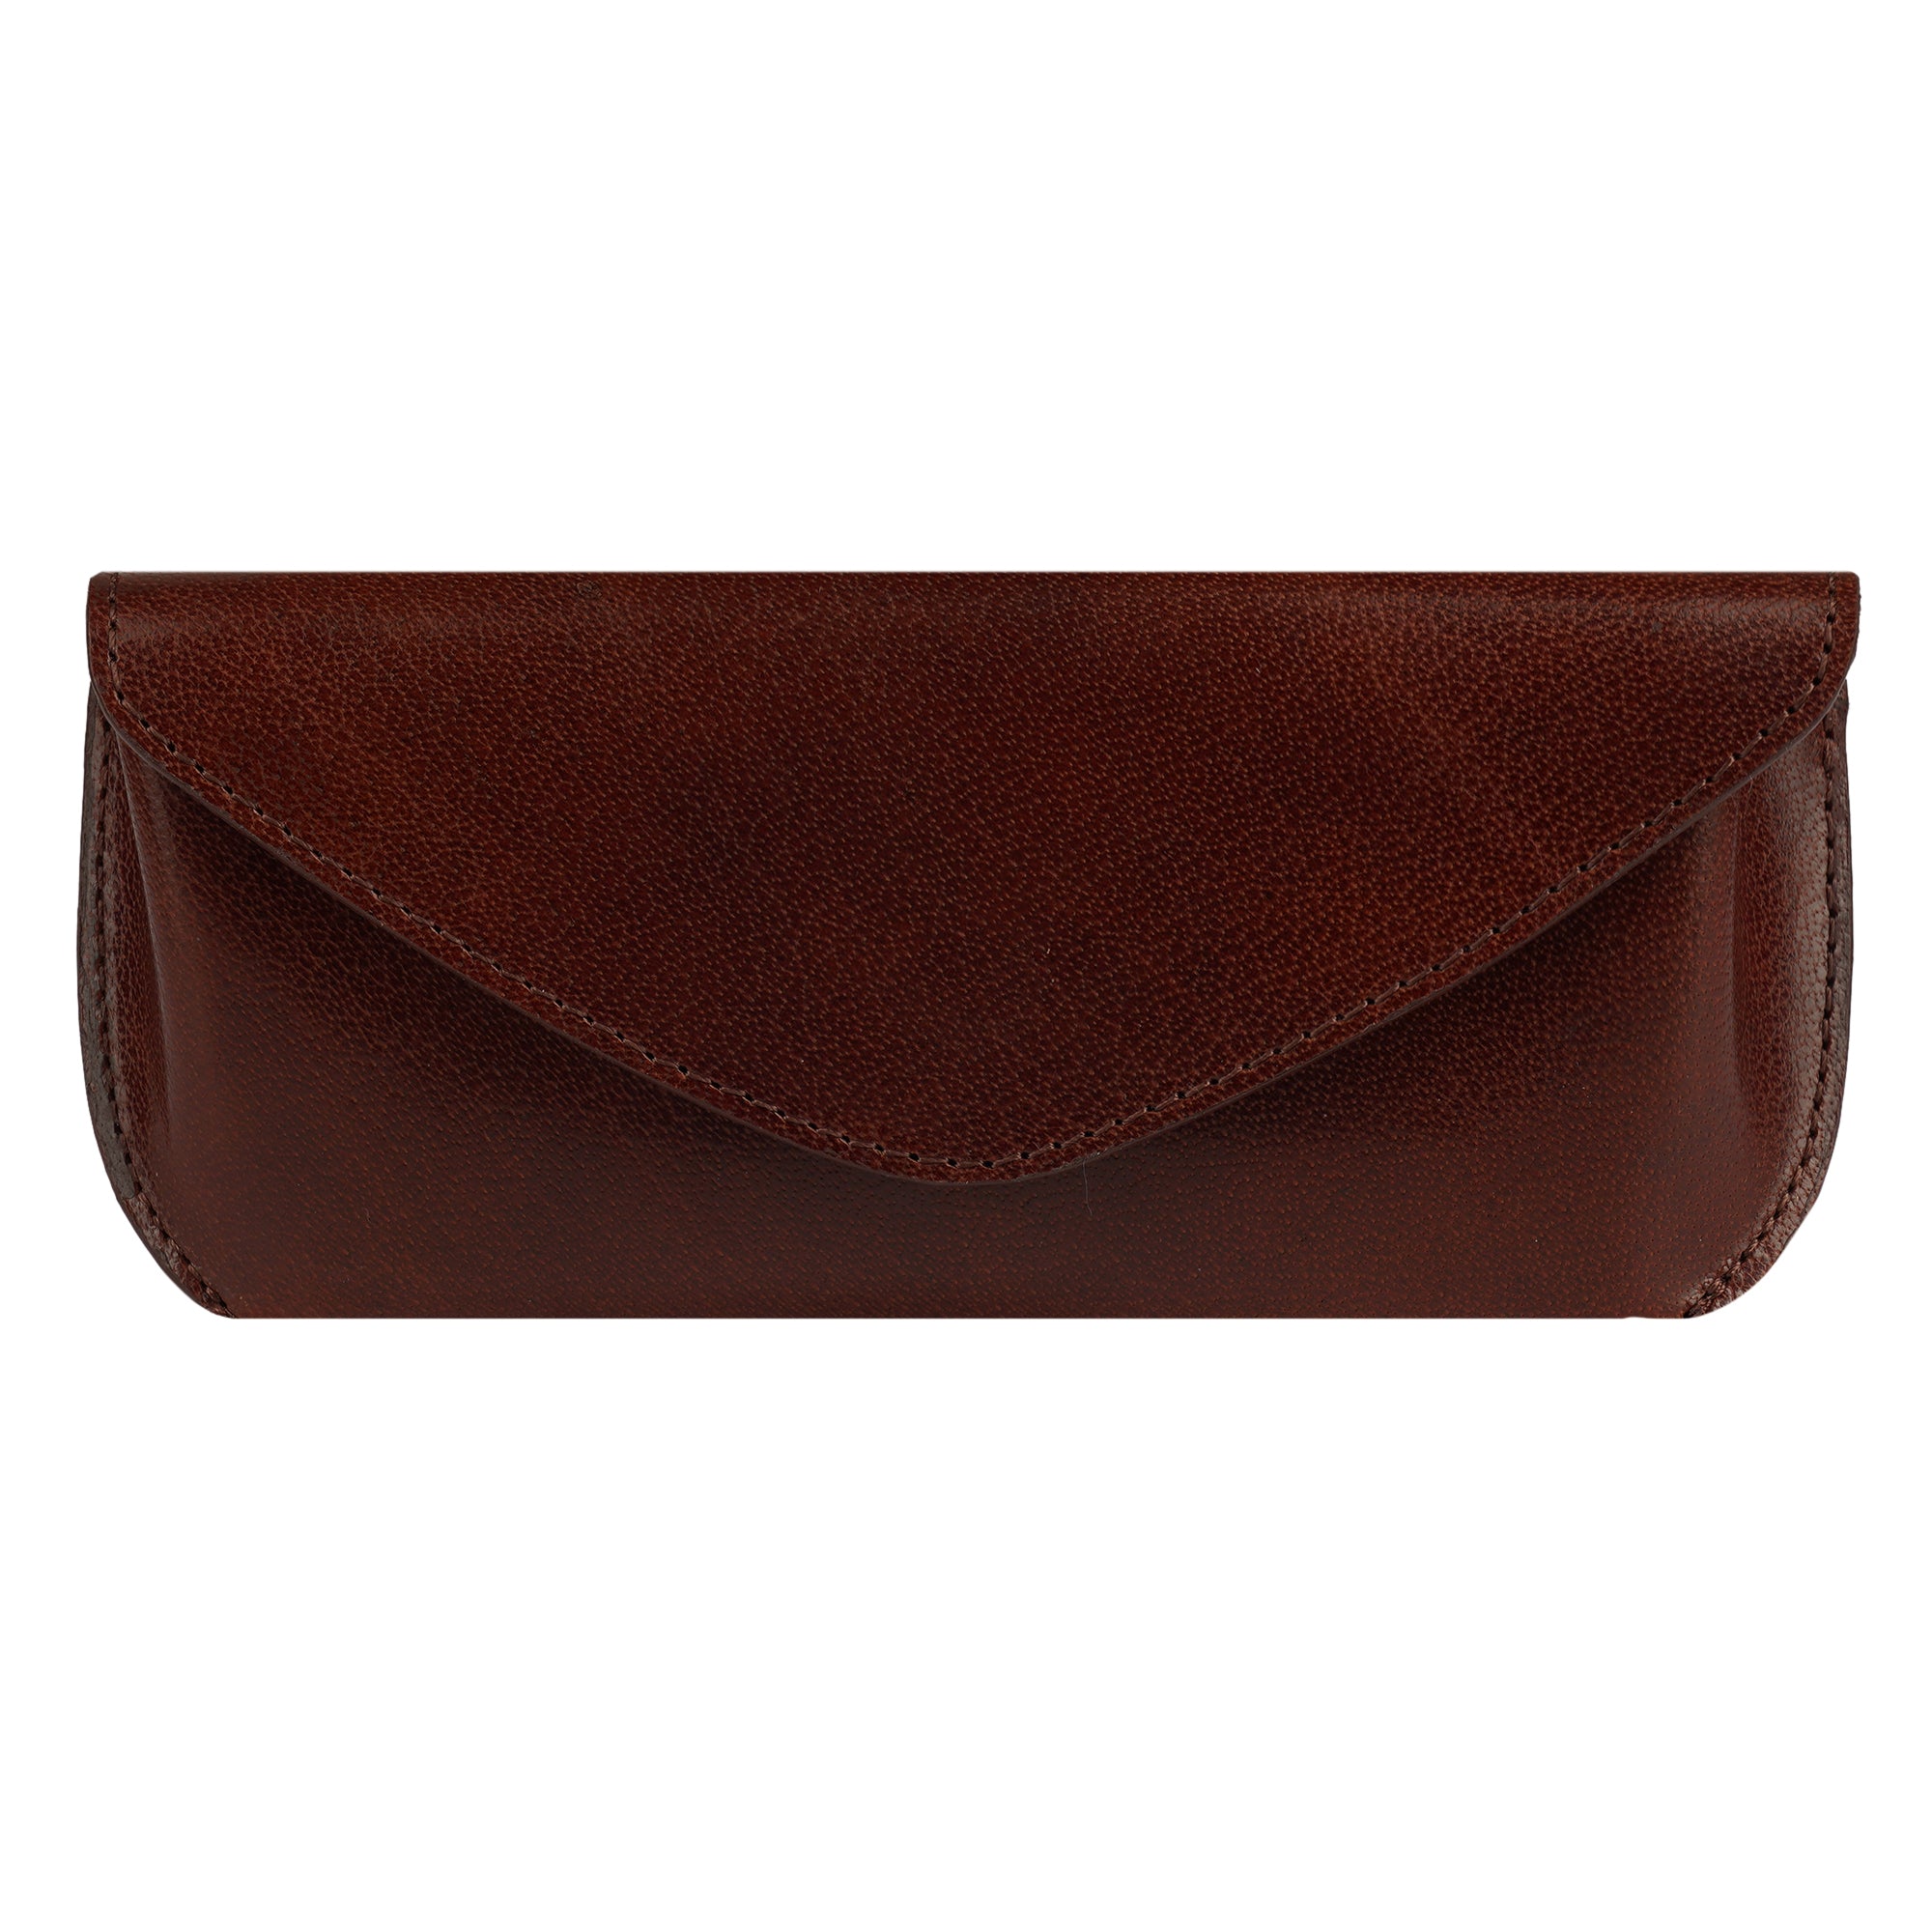 Premium Luxury Leather Cases Brown Color